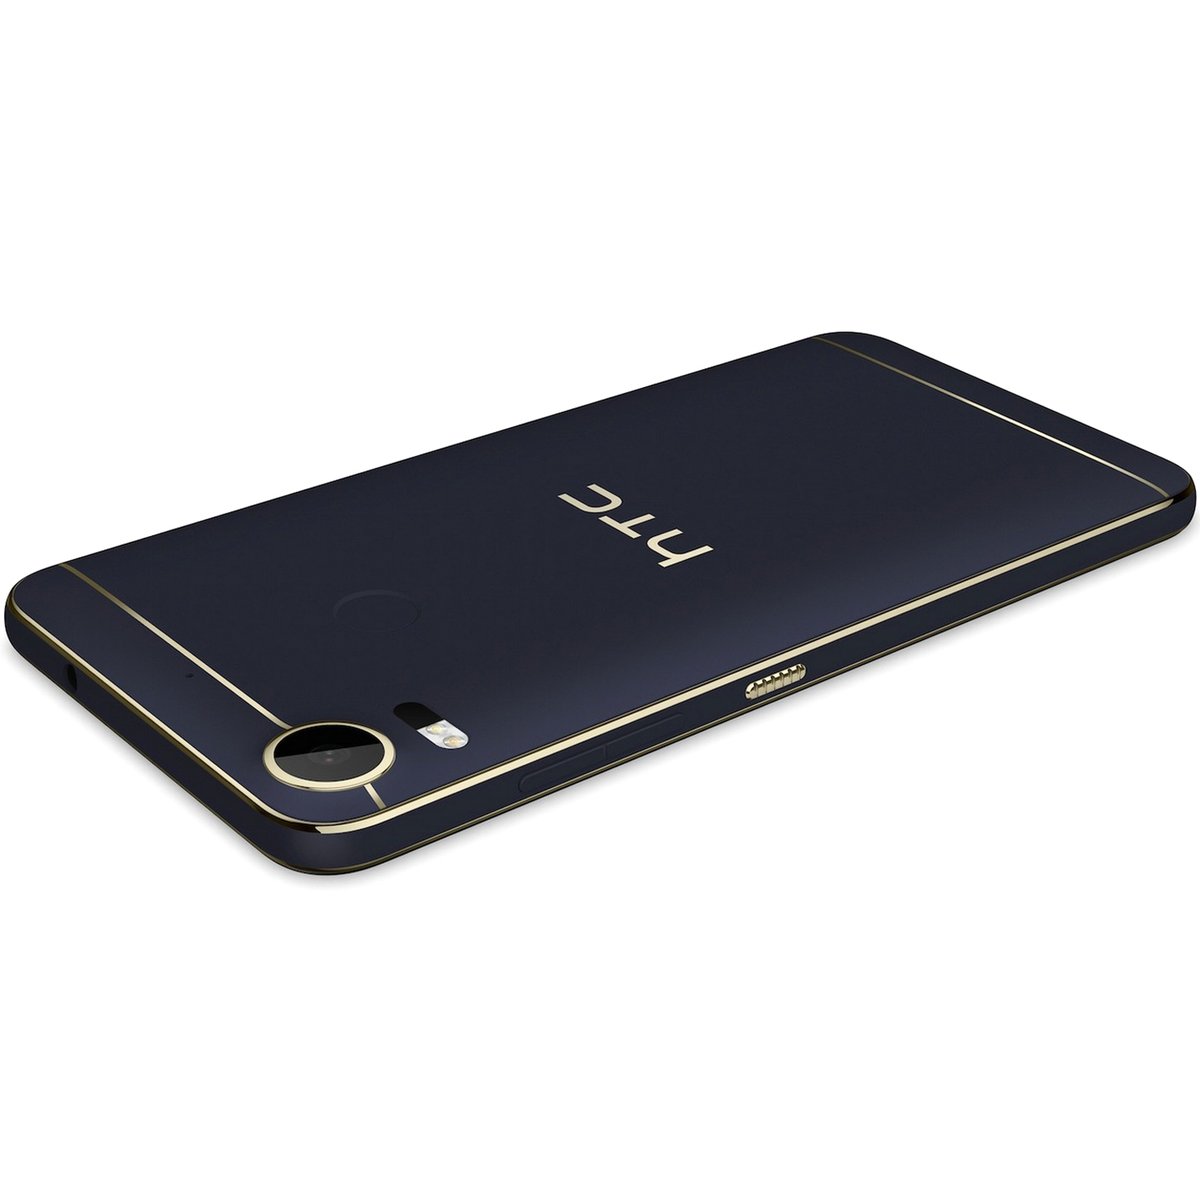 HTC Desire 10 Pro 4G 64G Blue